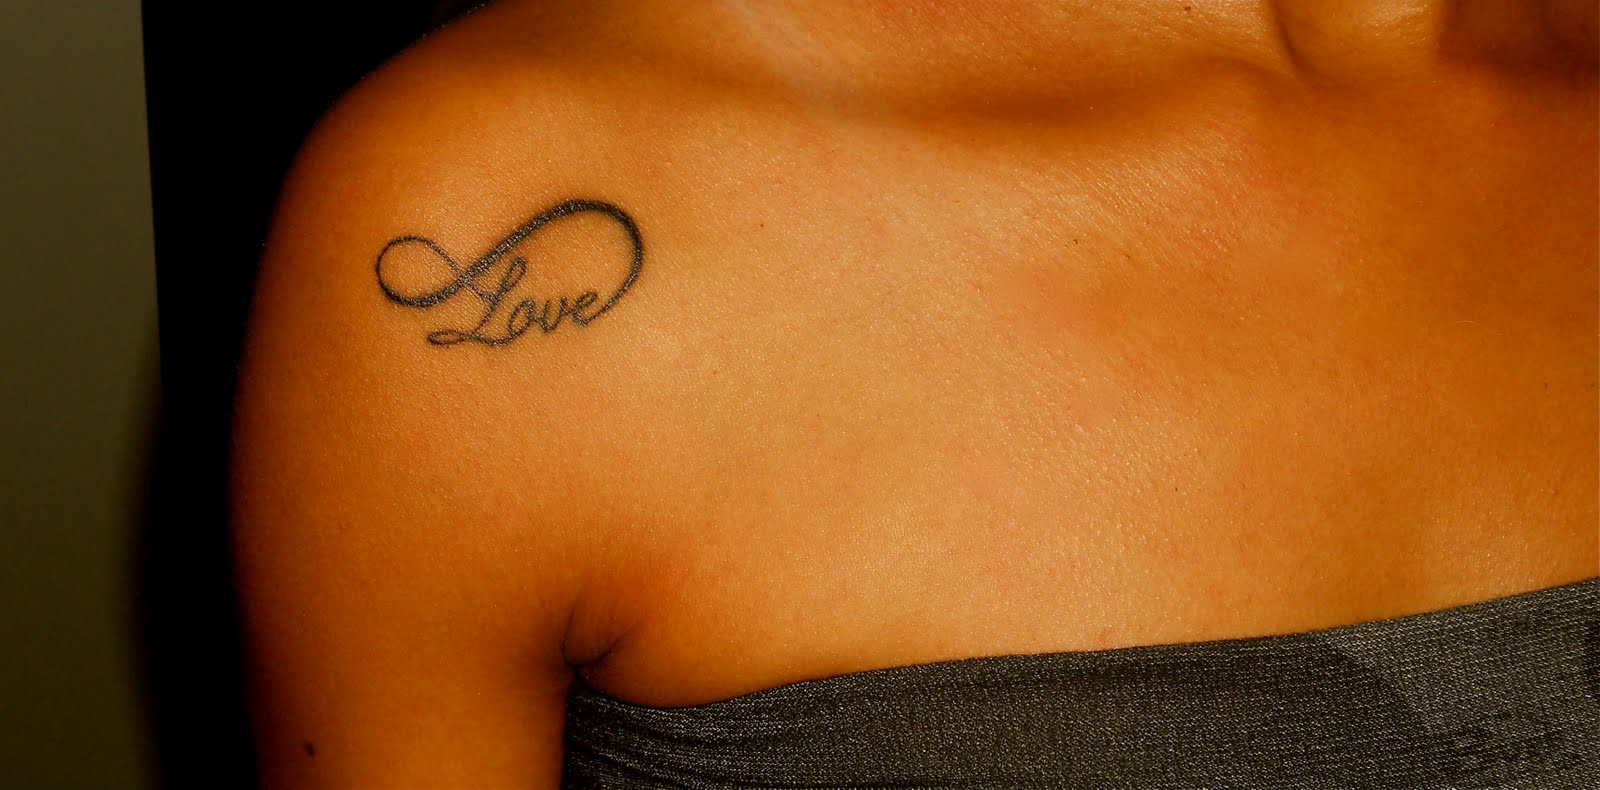 5. "Infinite Love" Tattoo - wide 4